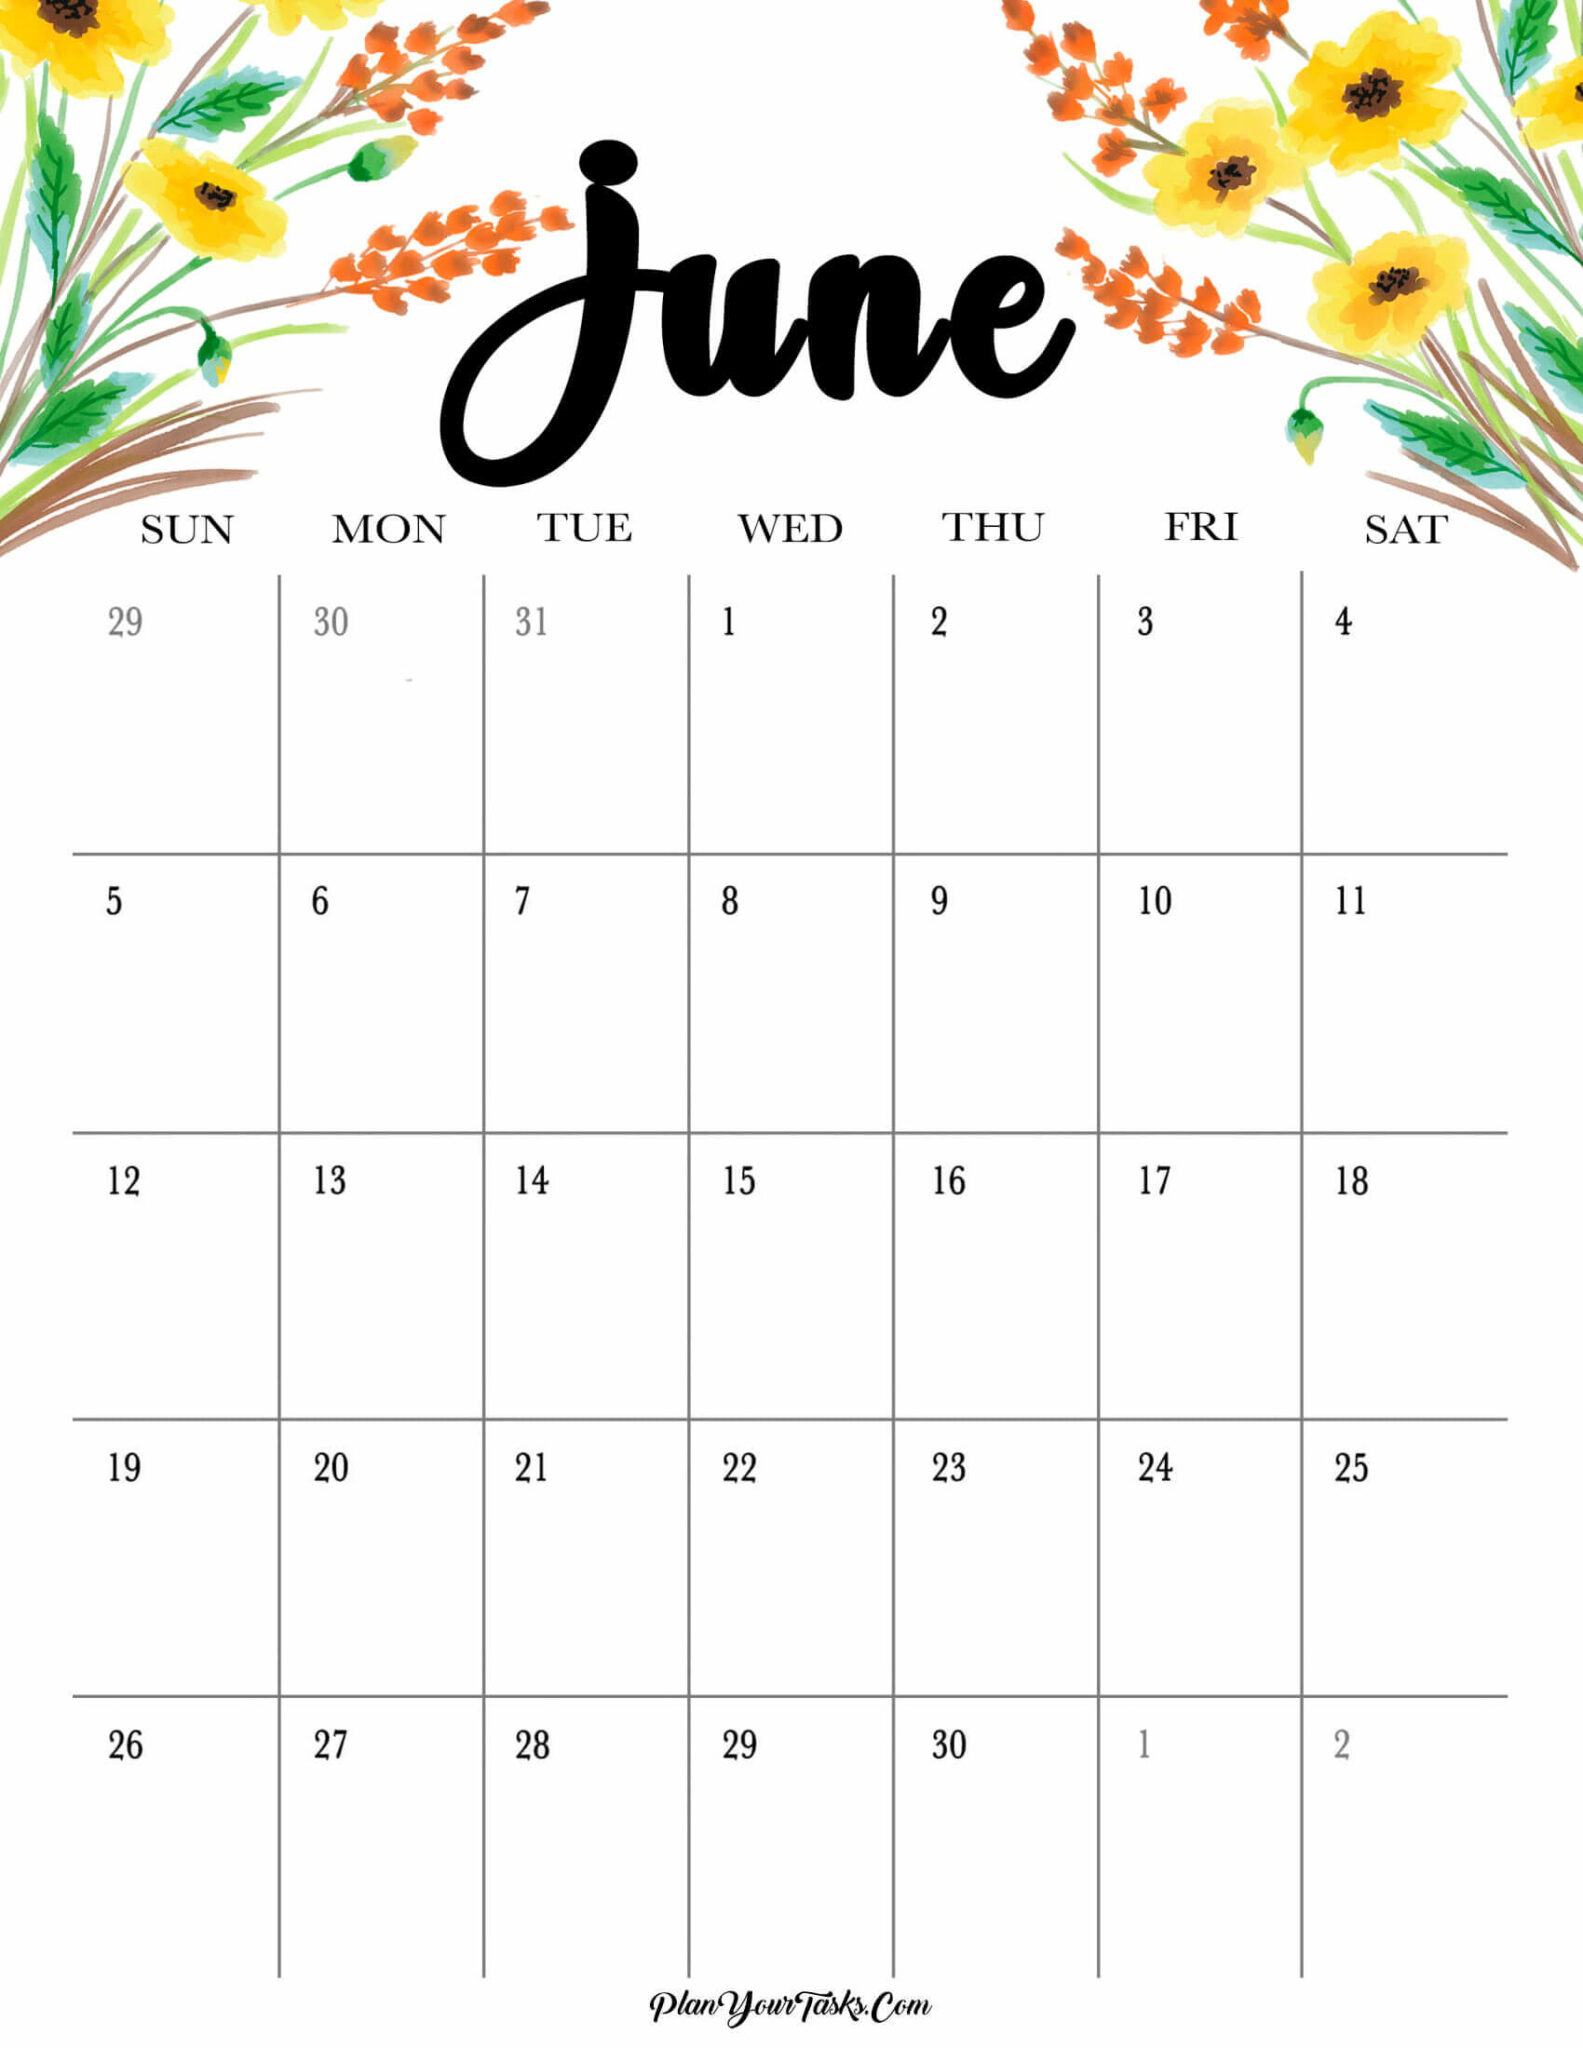 Catch 2022 Calendar For June